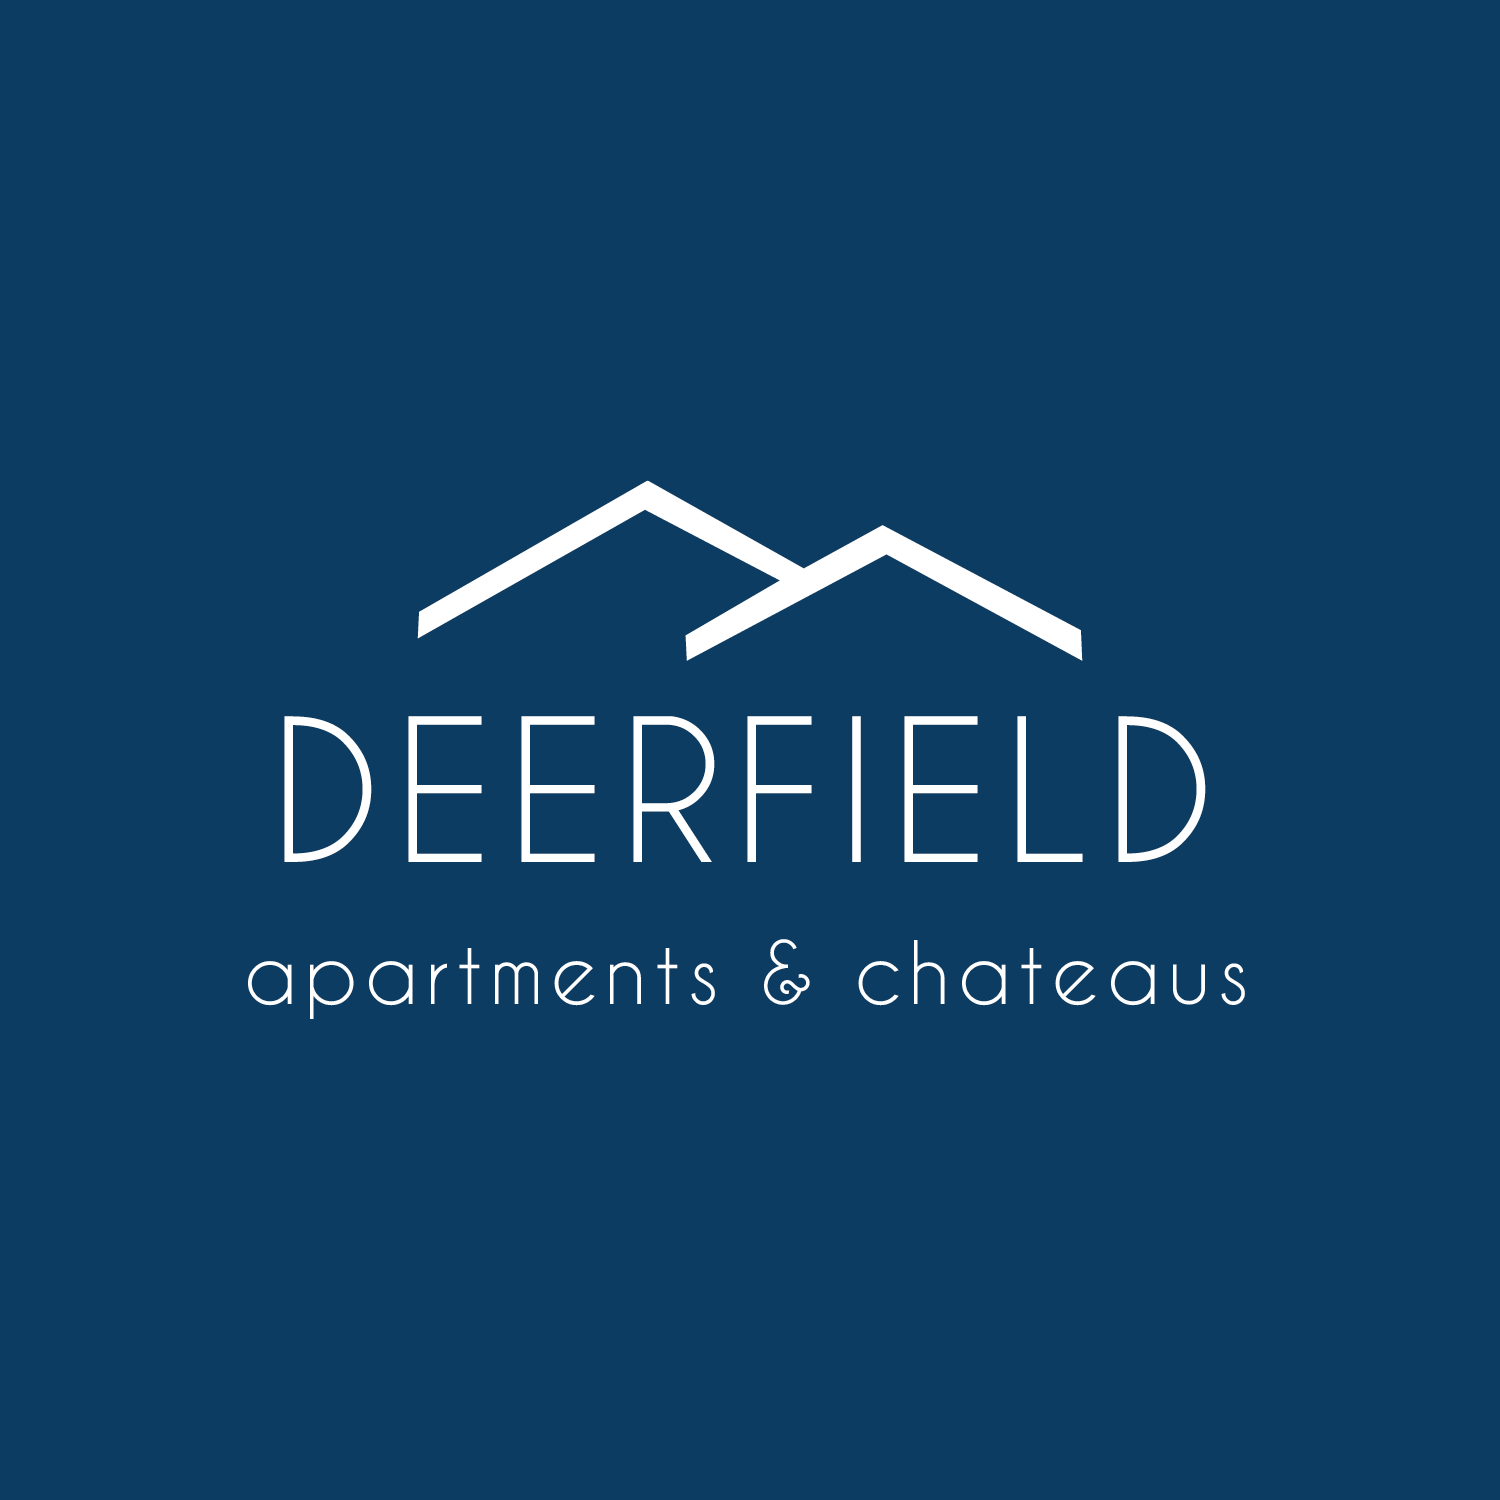 Deerfield Apartments & Chateaus - Fremont, NE 68025 - (402)721-0572 | ShowMeLocal.com